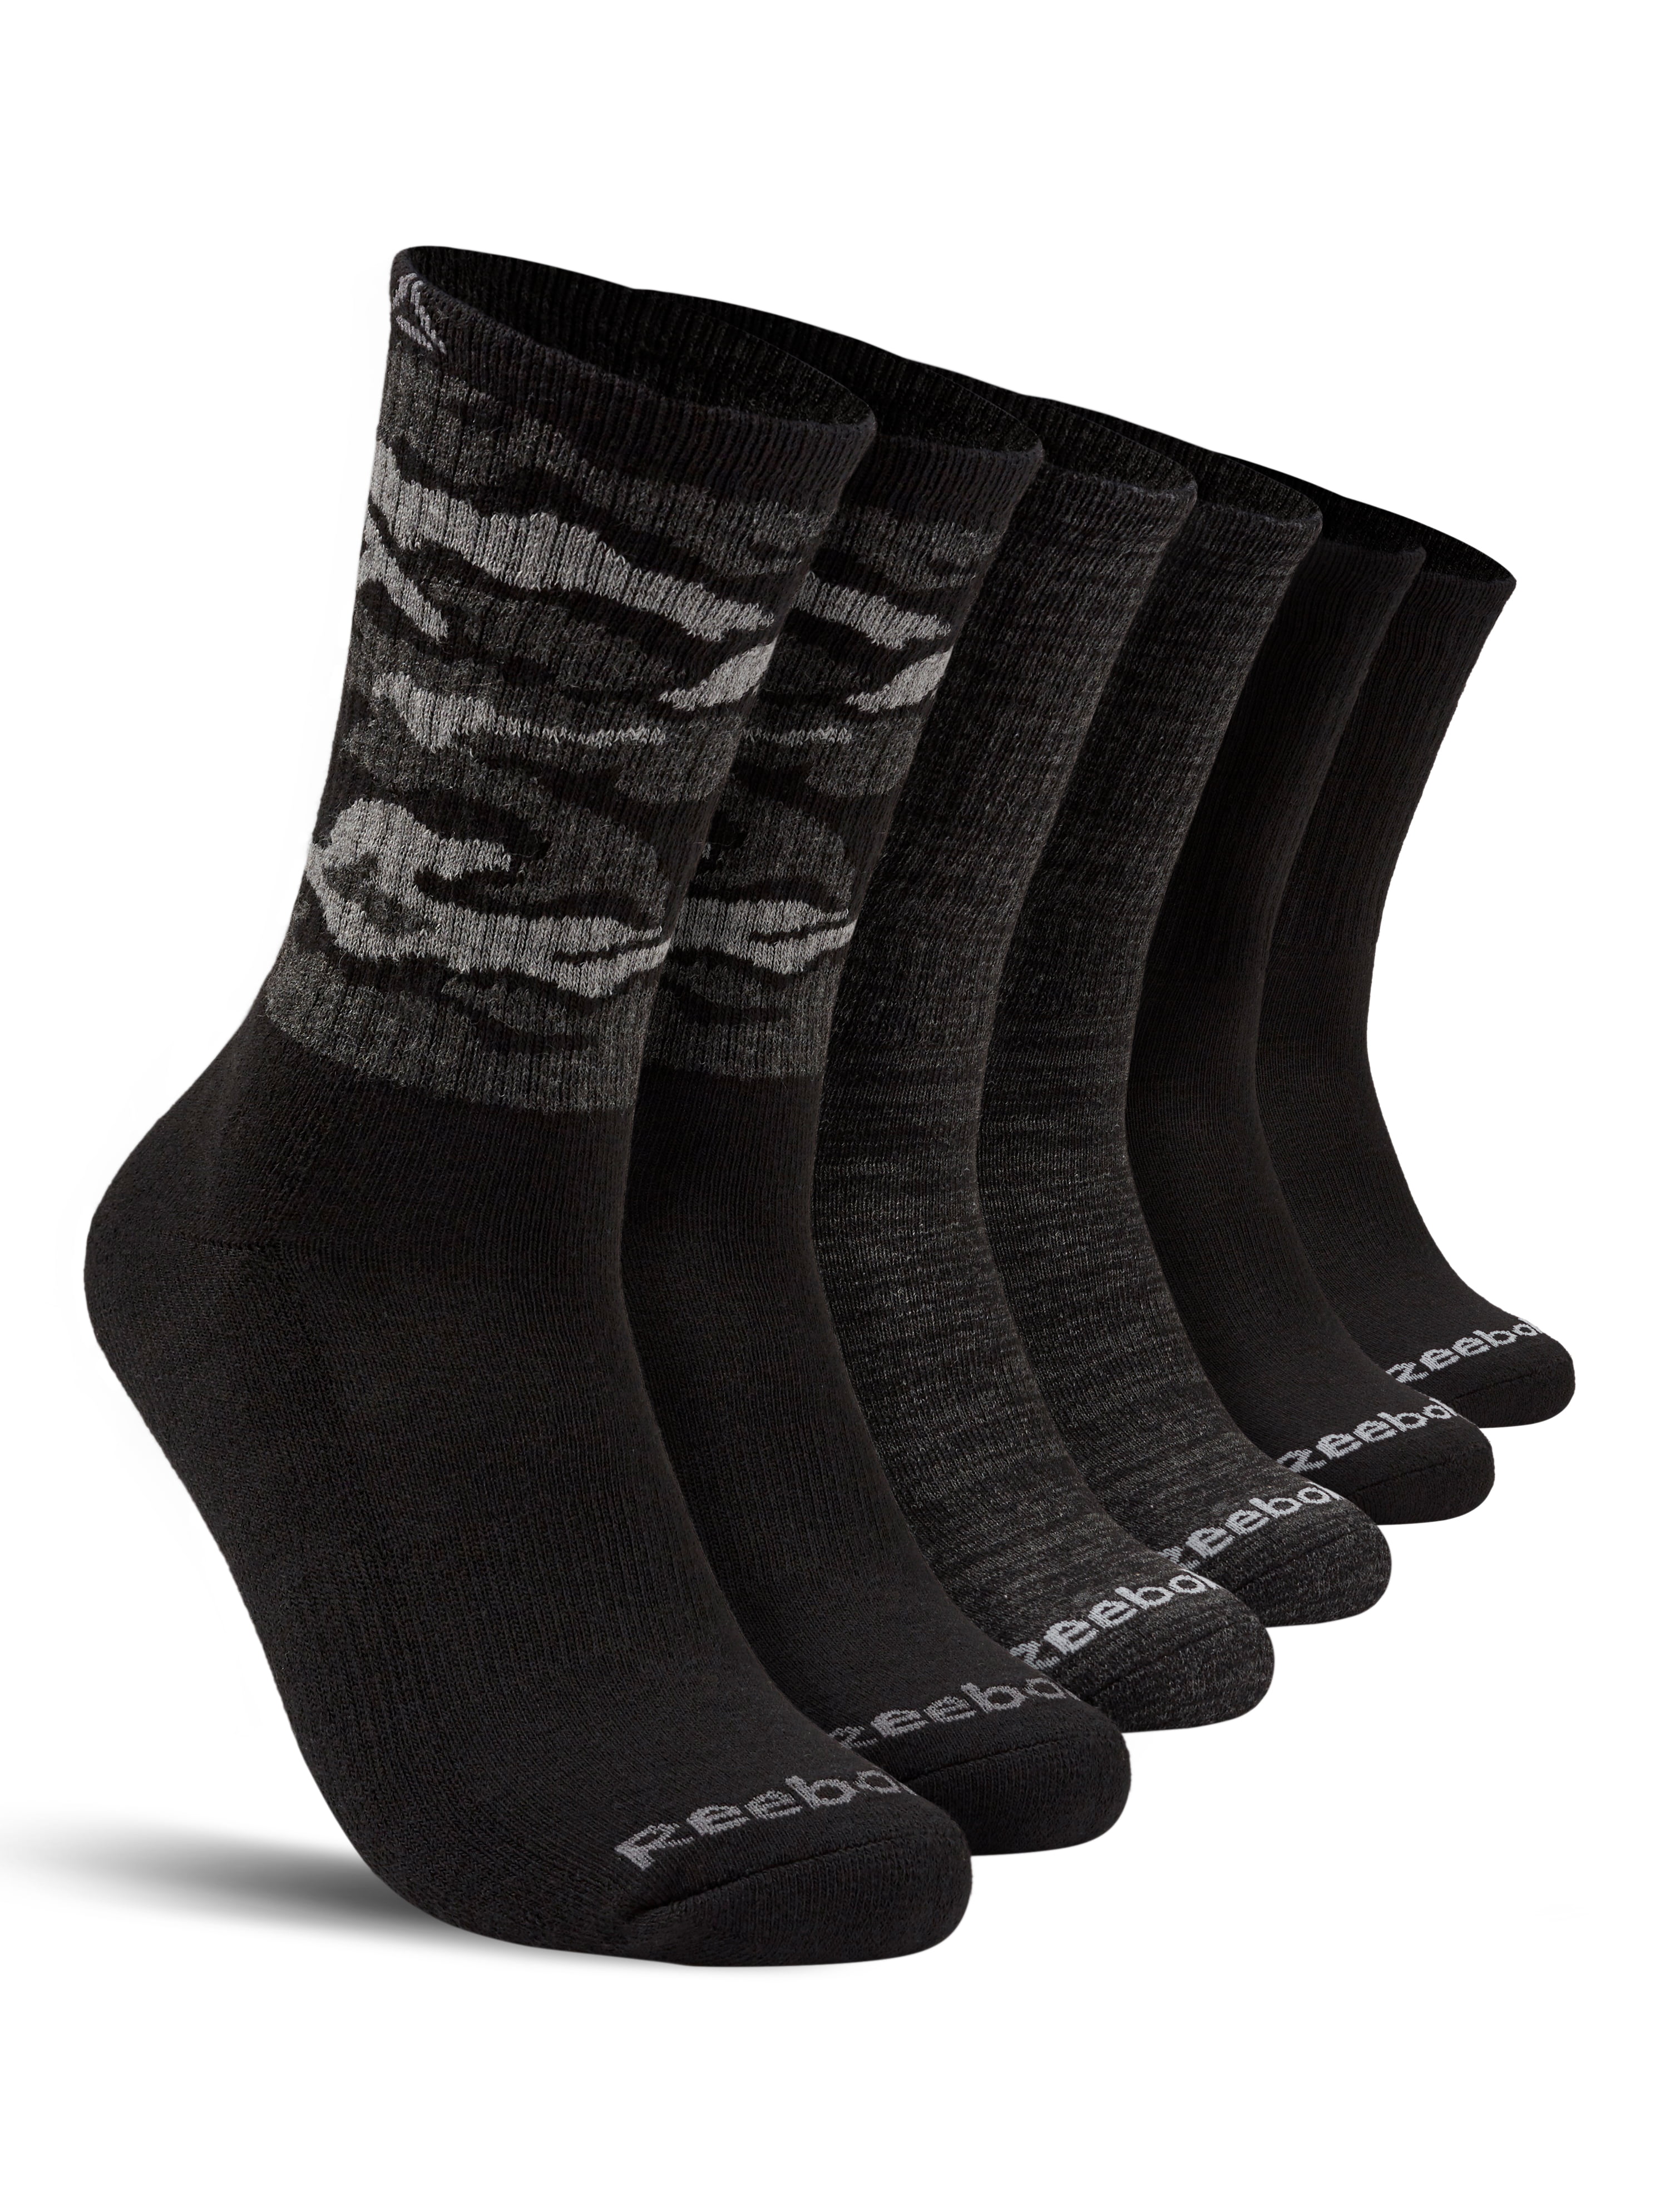 6-12.5 Athletic Running Compression Socks Mens Patterned Dress Casual Crew Socks